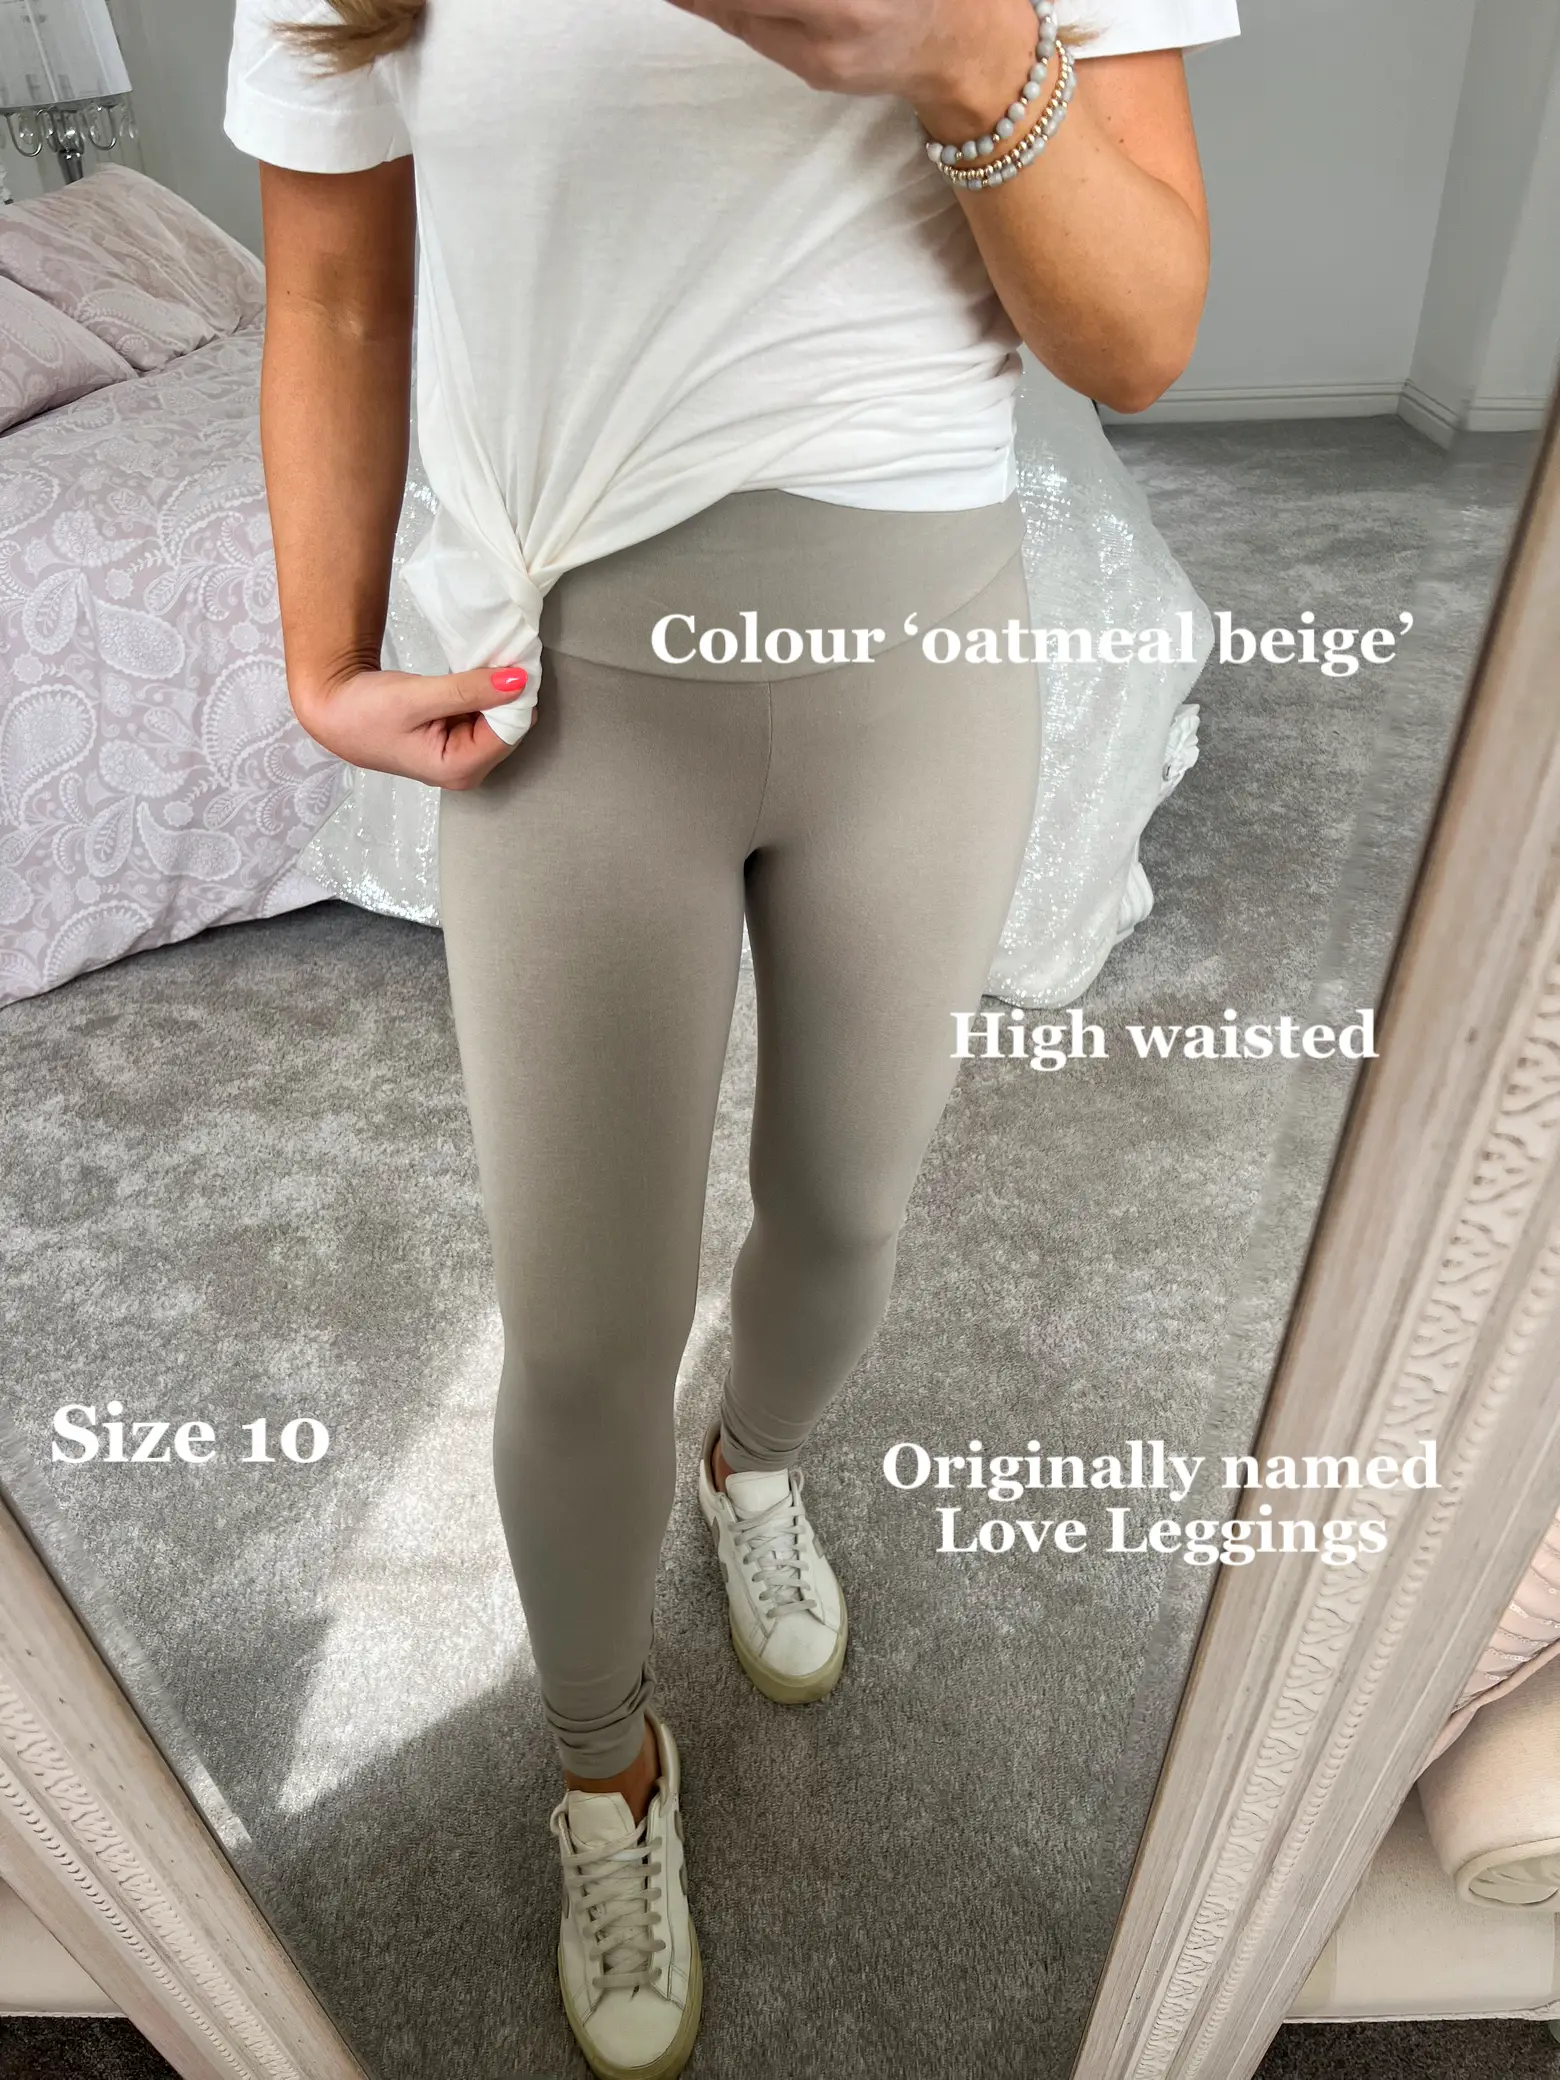 How to style beige leggings - Lemon8 Search